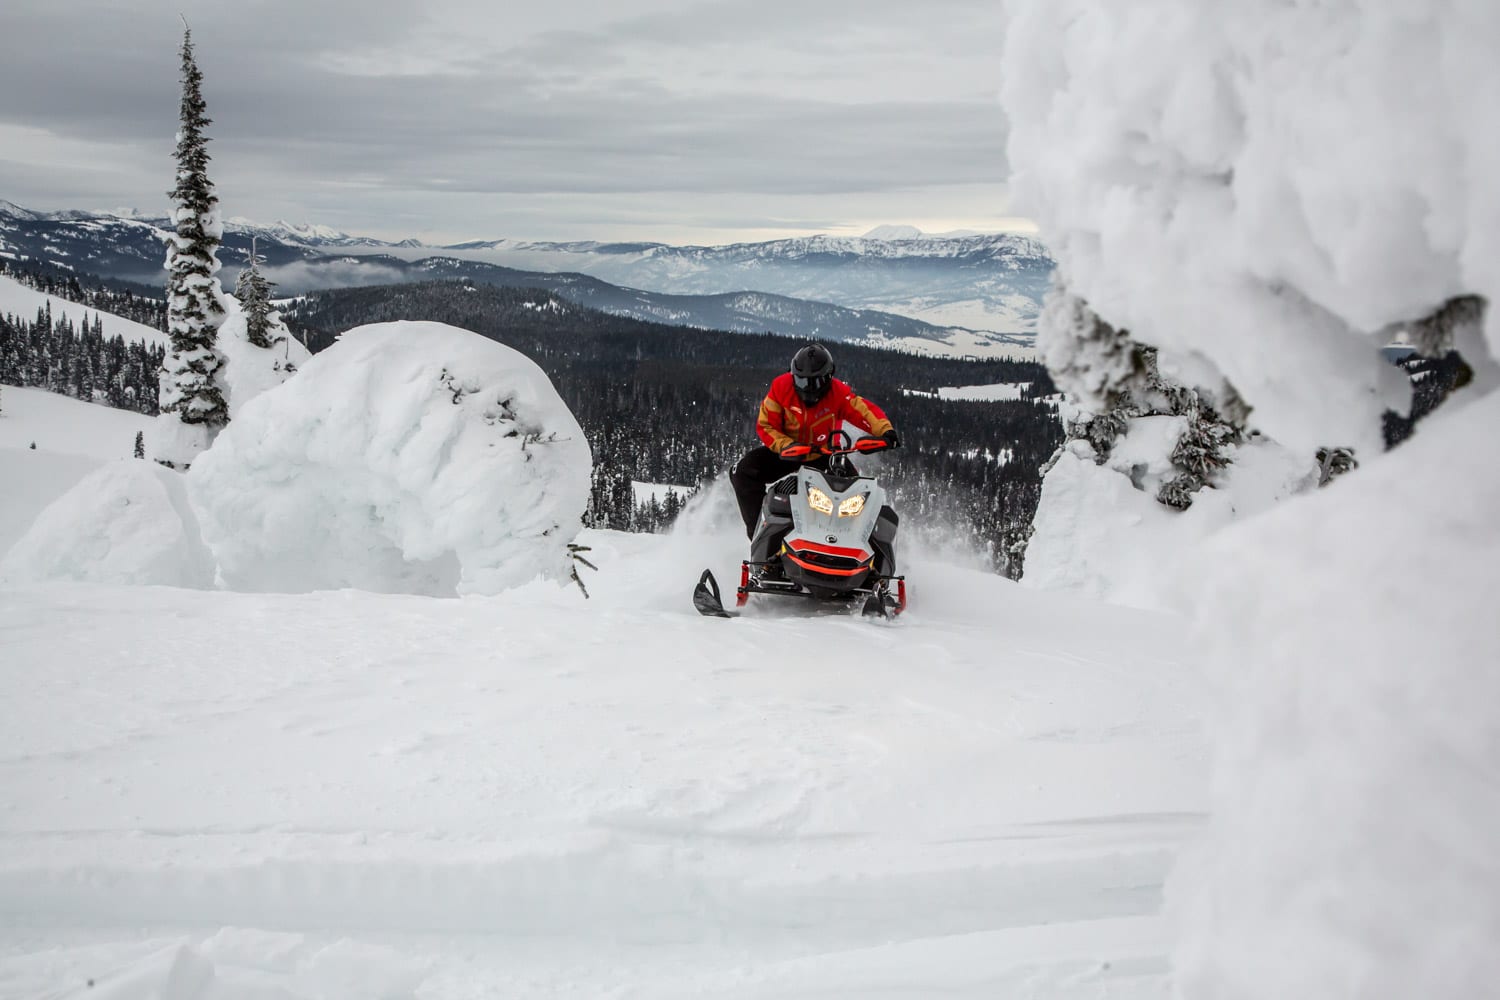 2021 Ski-Doo Snowmobiles New